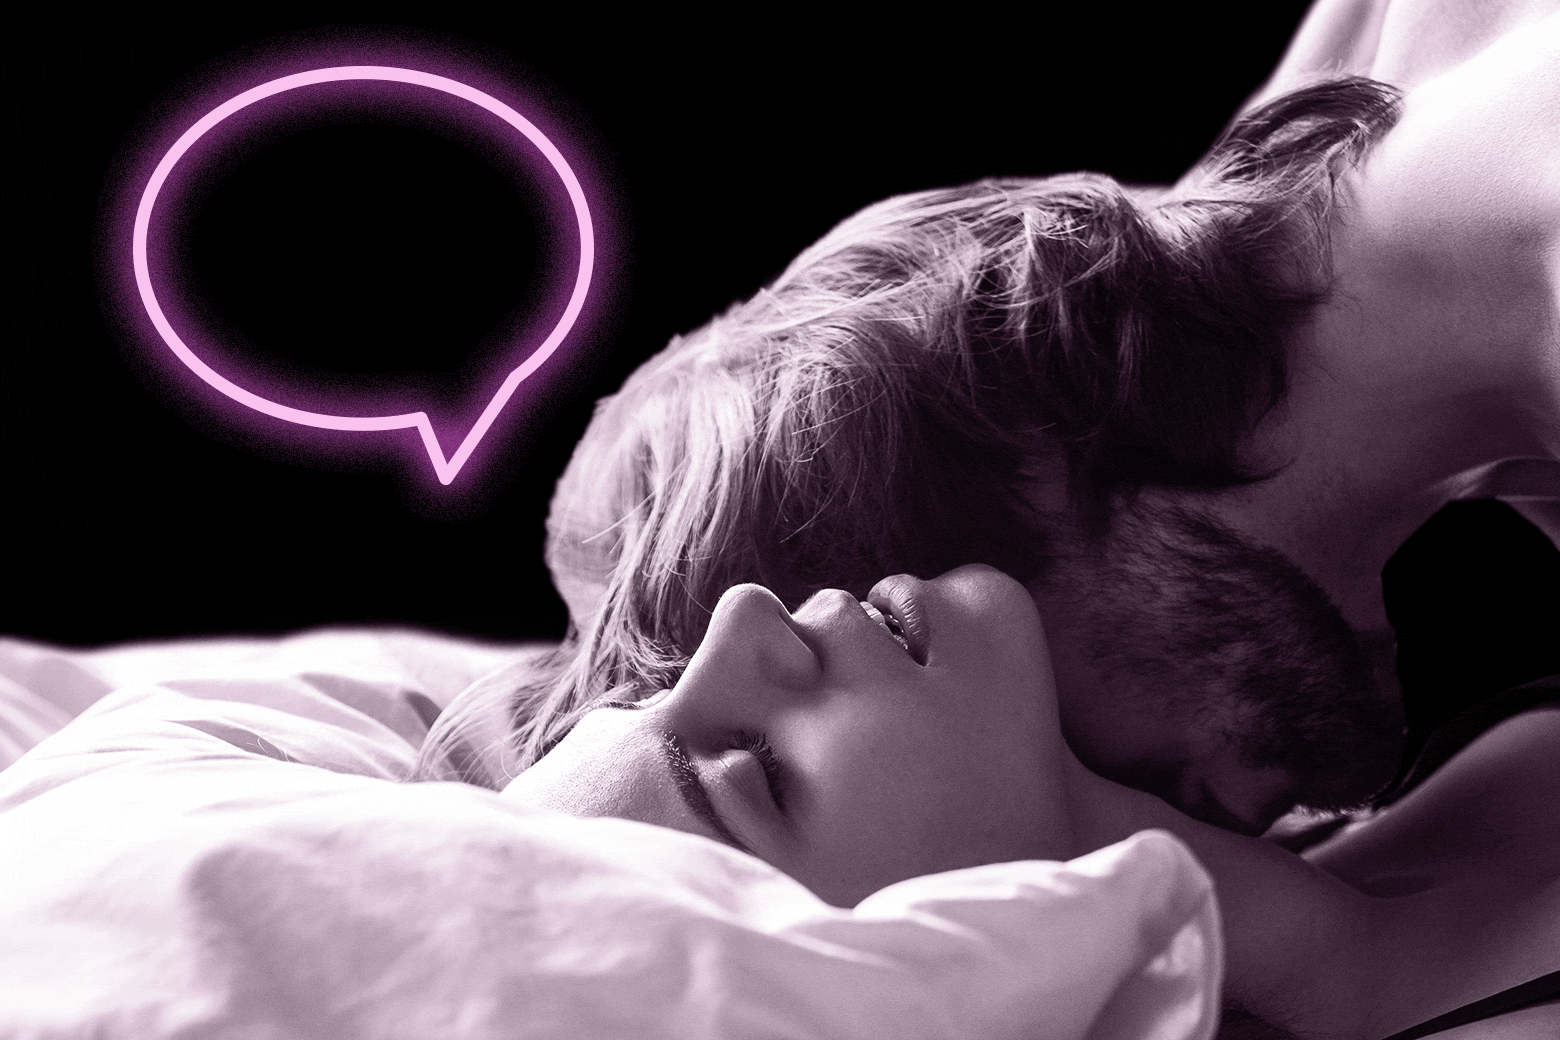 Consensual Sex And Loving - Boyfriend doesn't say â€œI love youâ€: I don't know how to approach my  boyfriend's exclamation during sex.